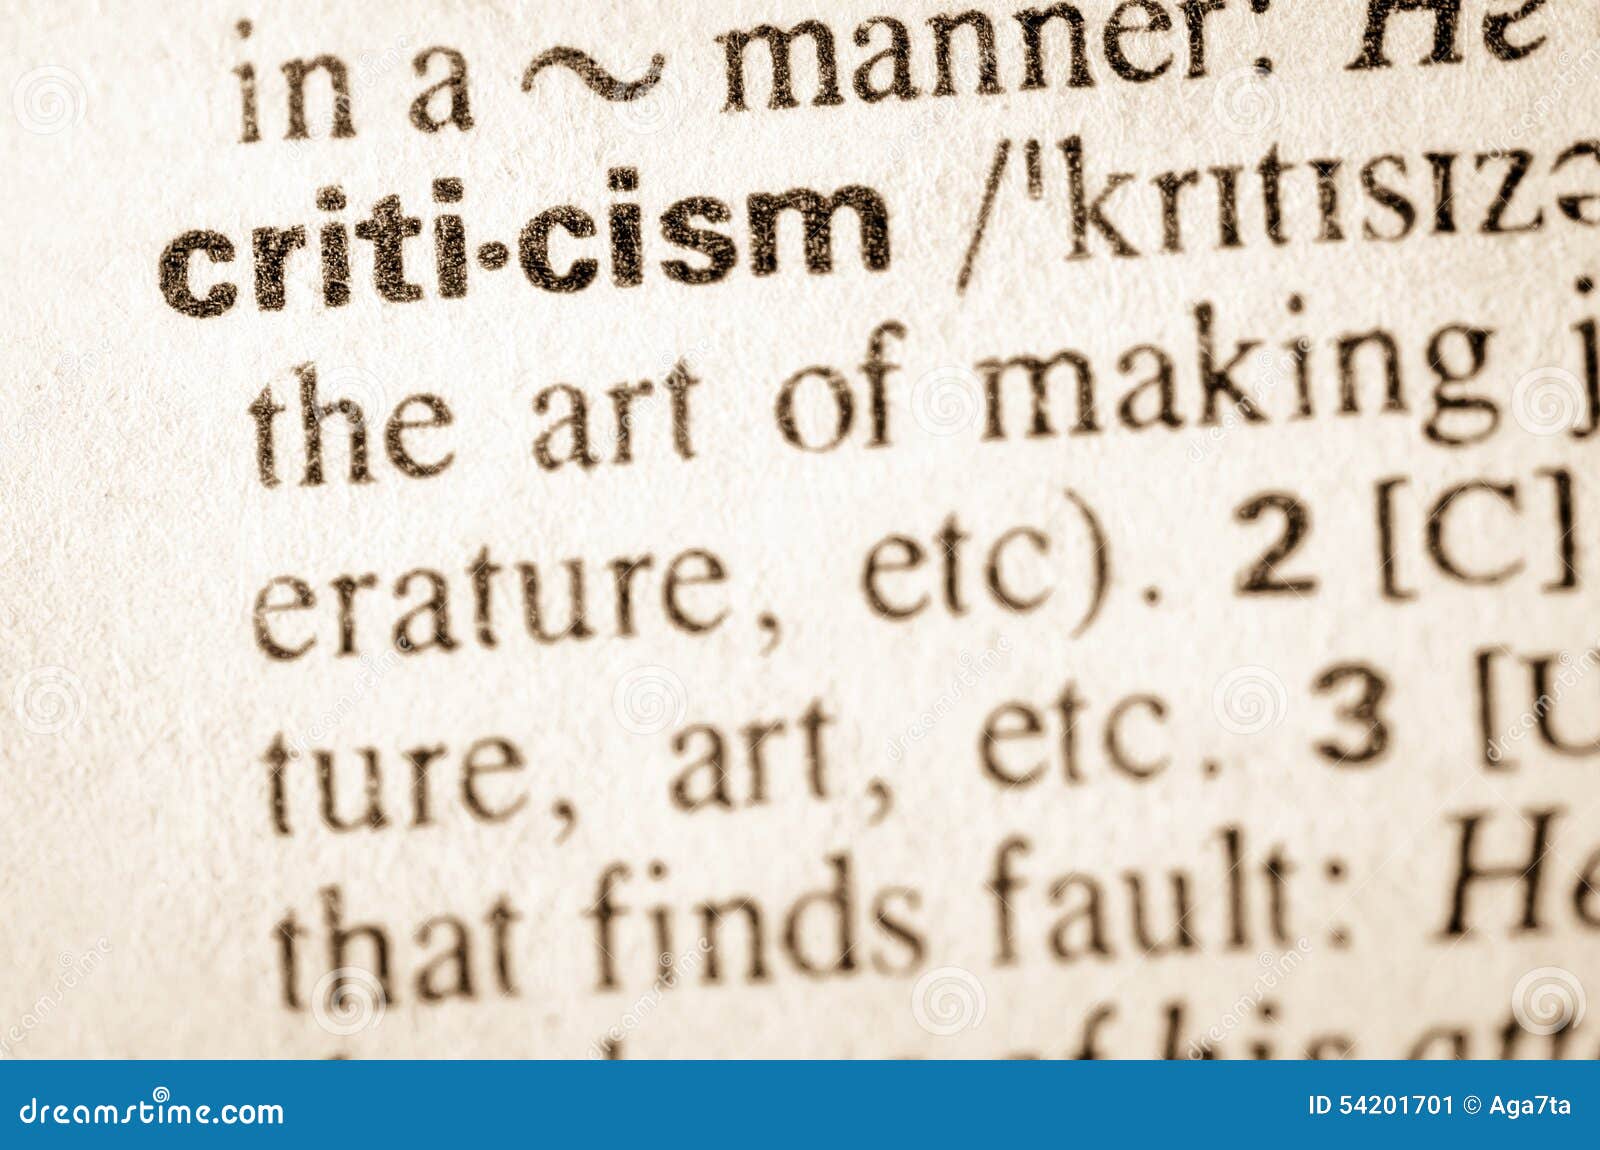 define the criticism